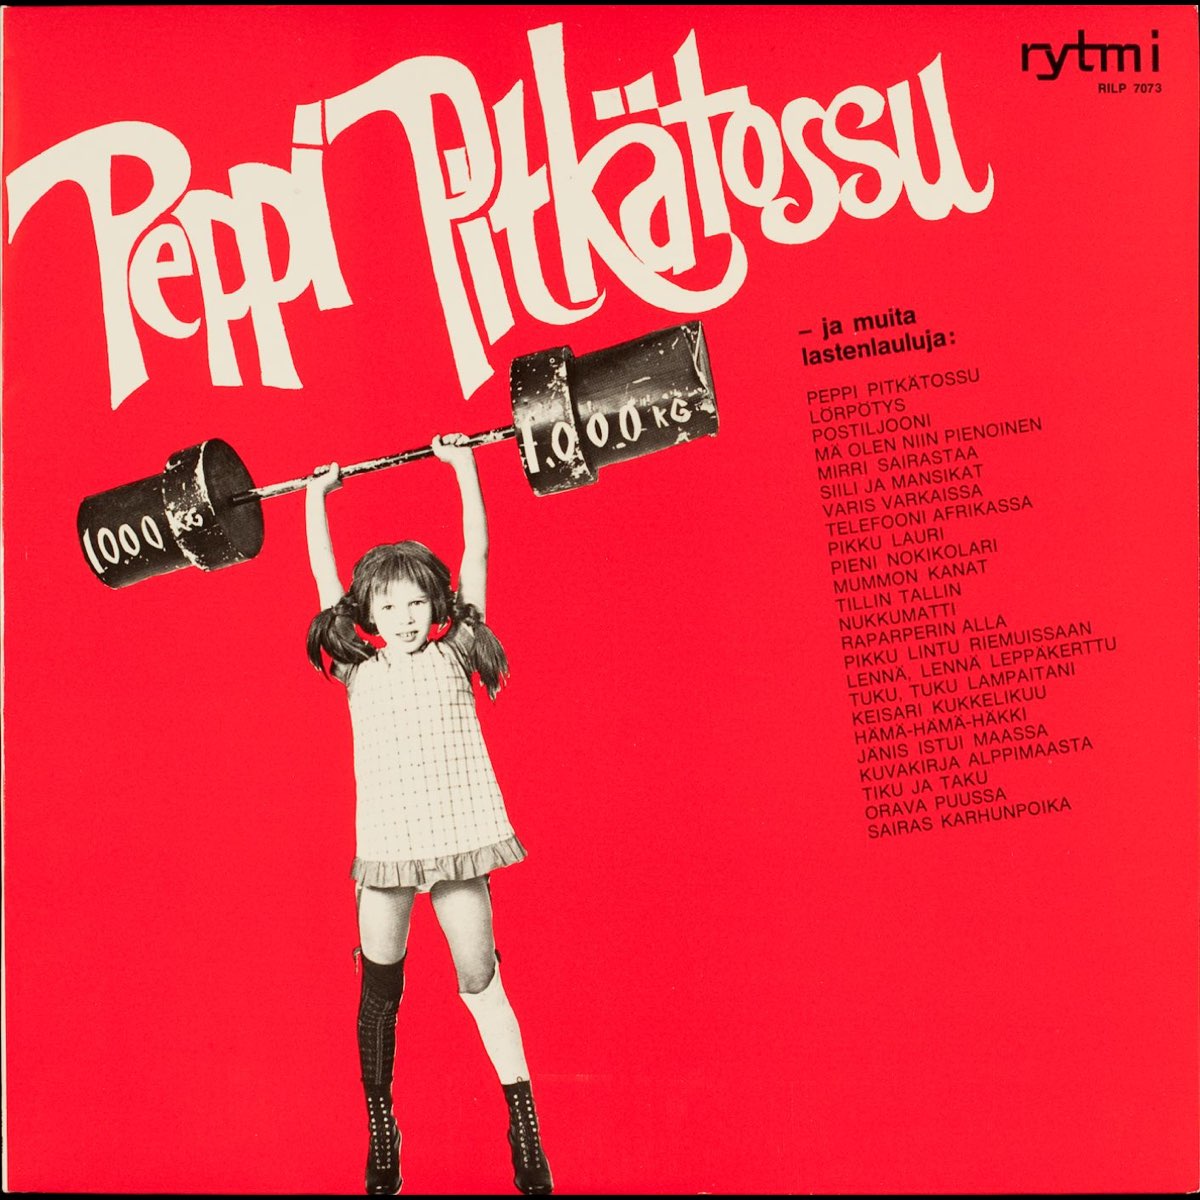 Peppi Pitkätossu ja muita lastenlauluja by Various Artists on Apple Music